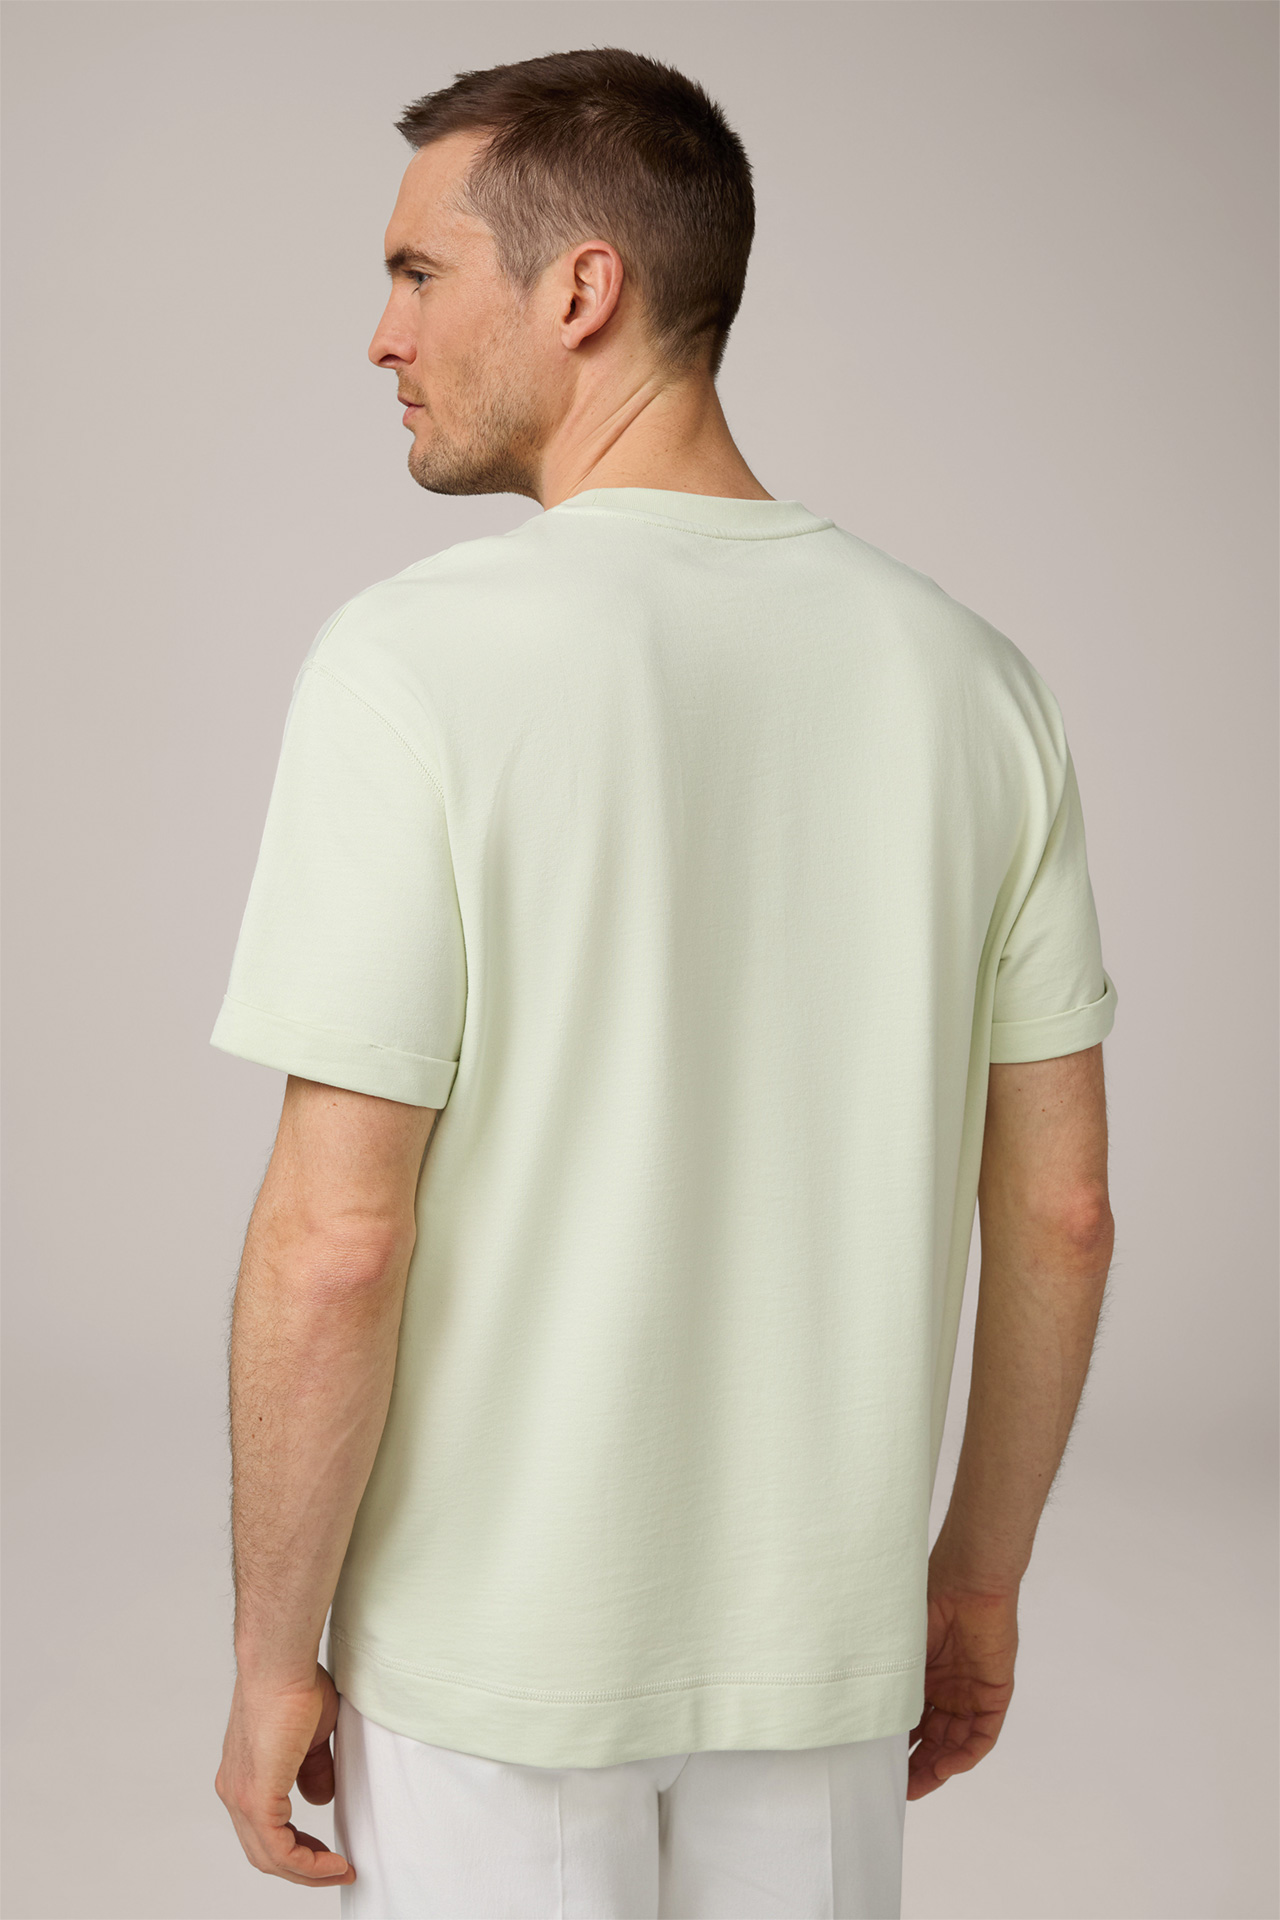 Sevo Cotton T-shirt in Light Green